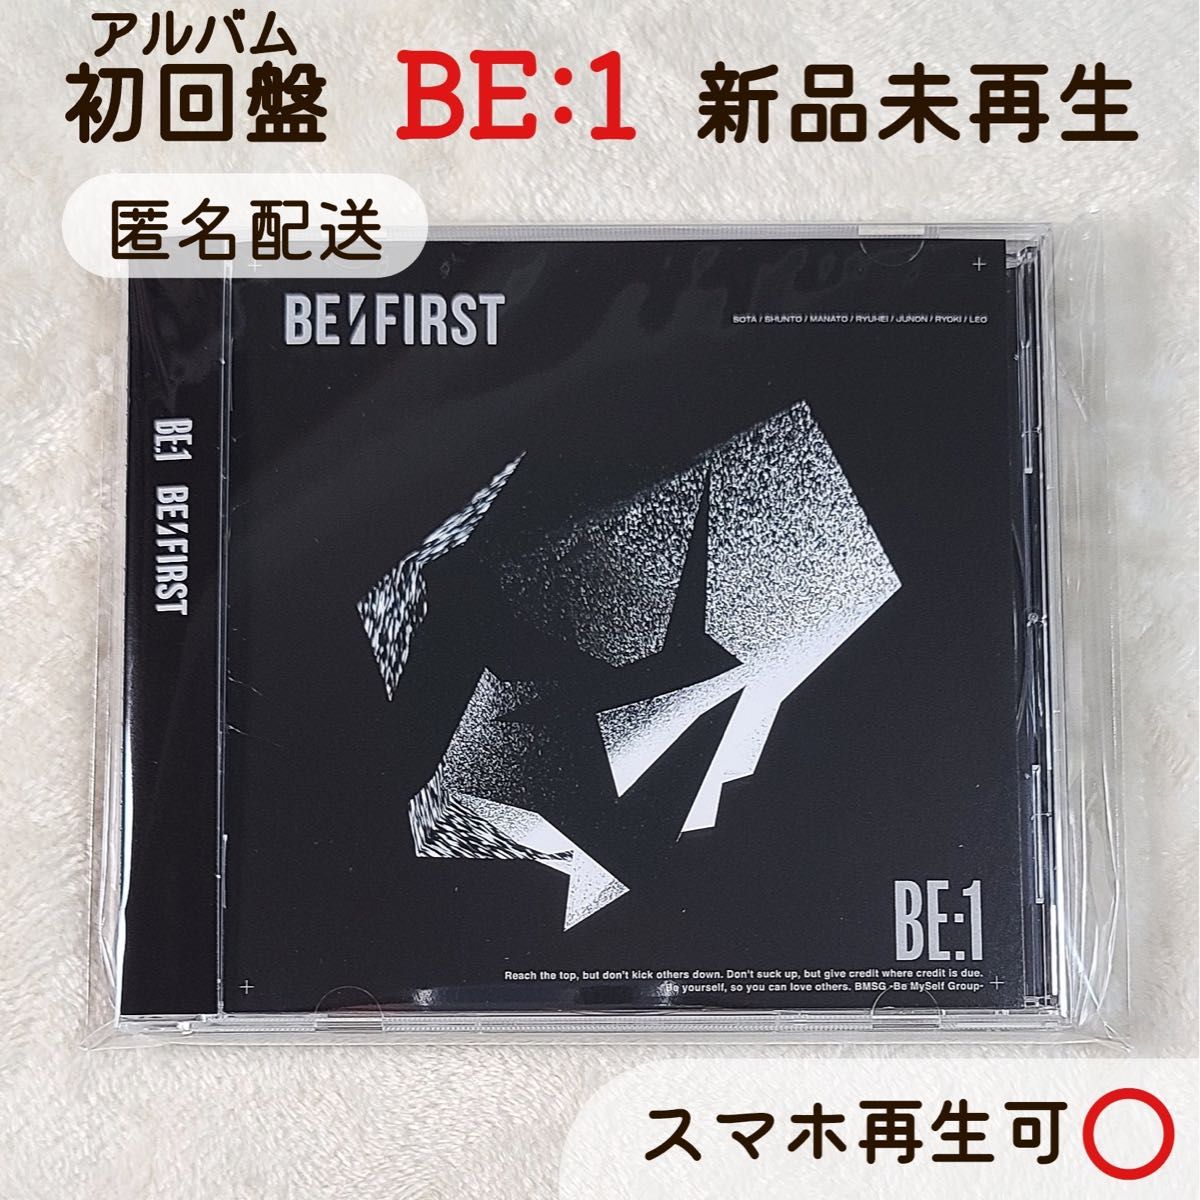 BE:FIRST BE:1 【CD】アルバム 初回限定盤 定価 3300円 ※特典無し ※未再生